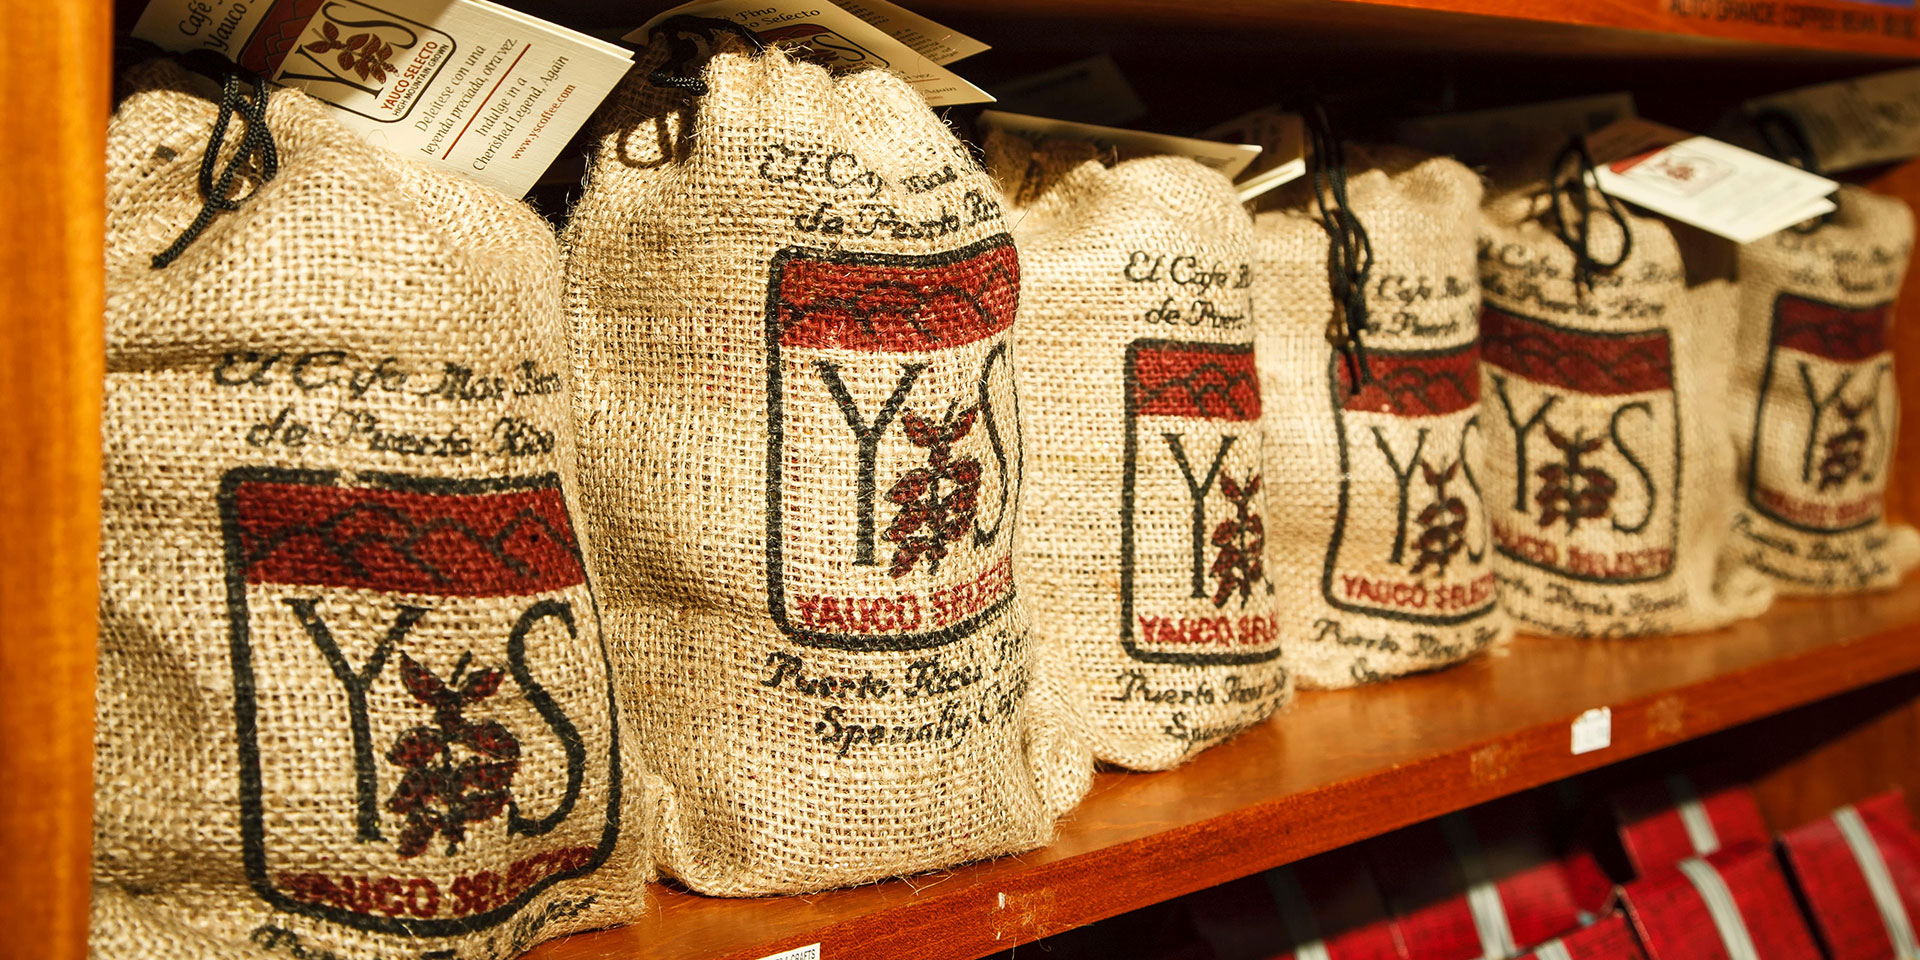  bolsa de granos de café cultivados en Puerto Rico